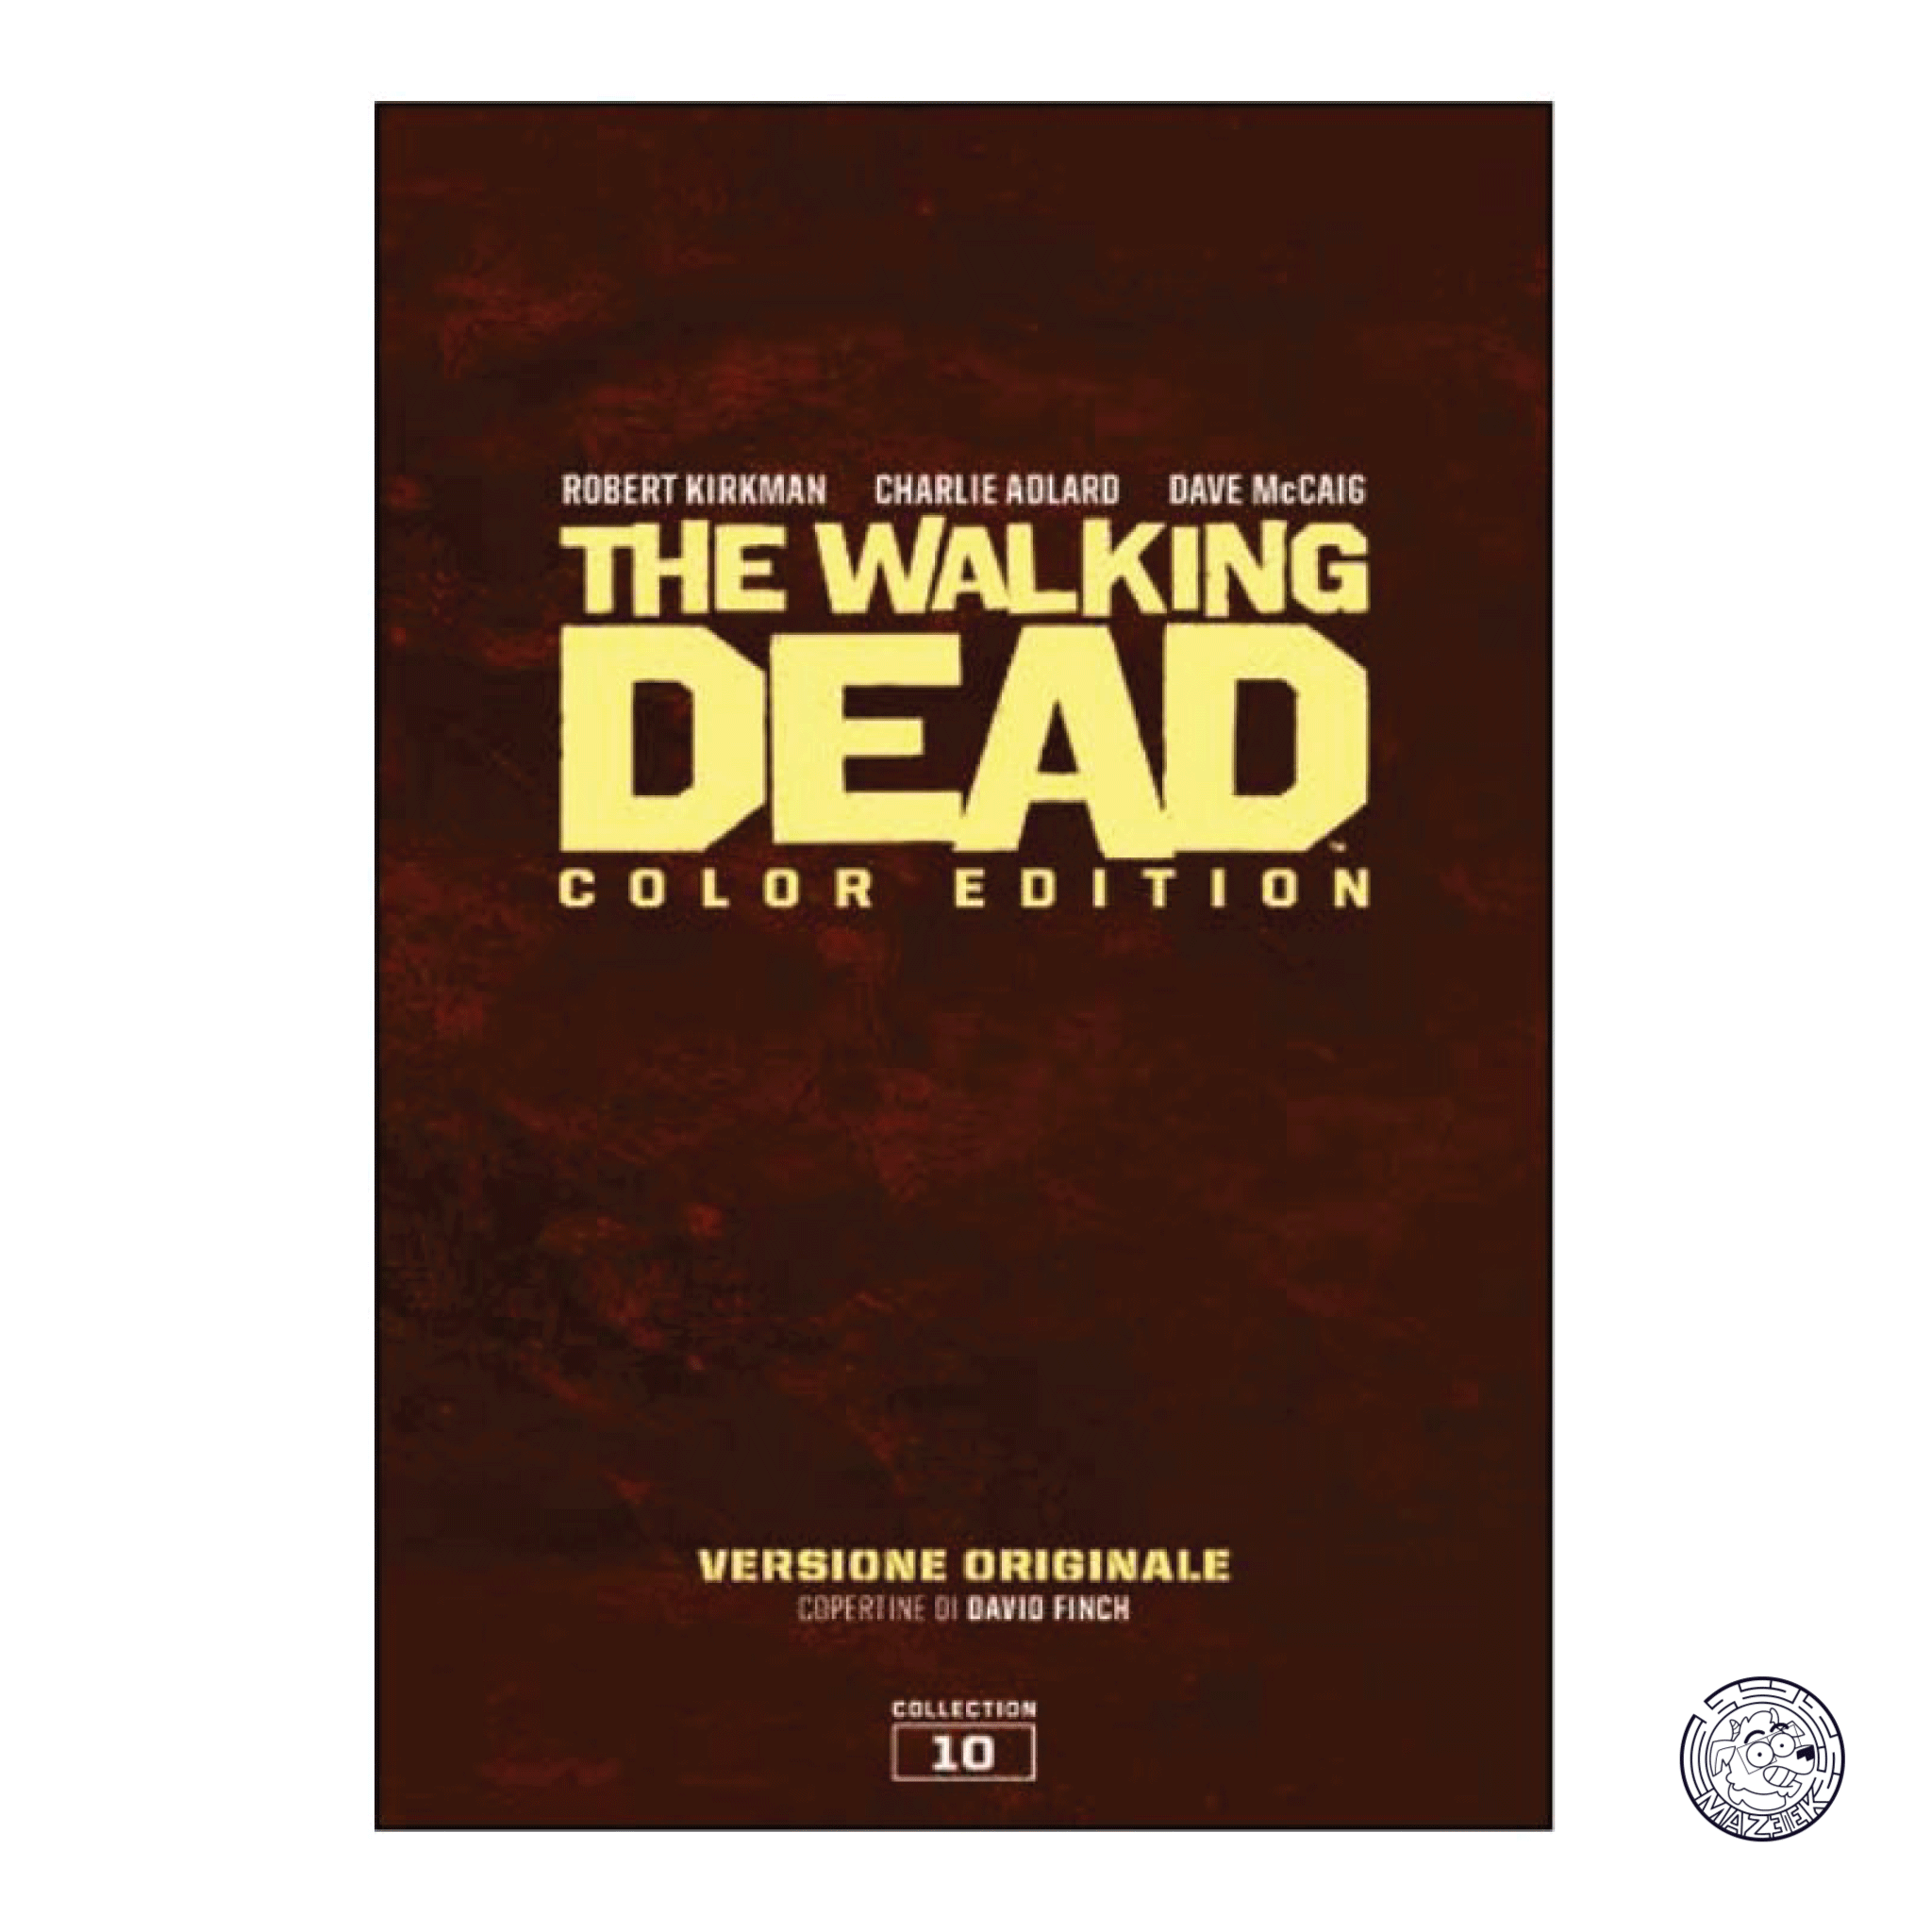 The Walking Dead - Color Edition Slipcase 10